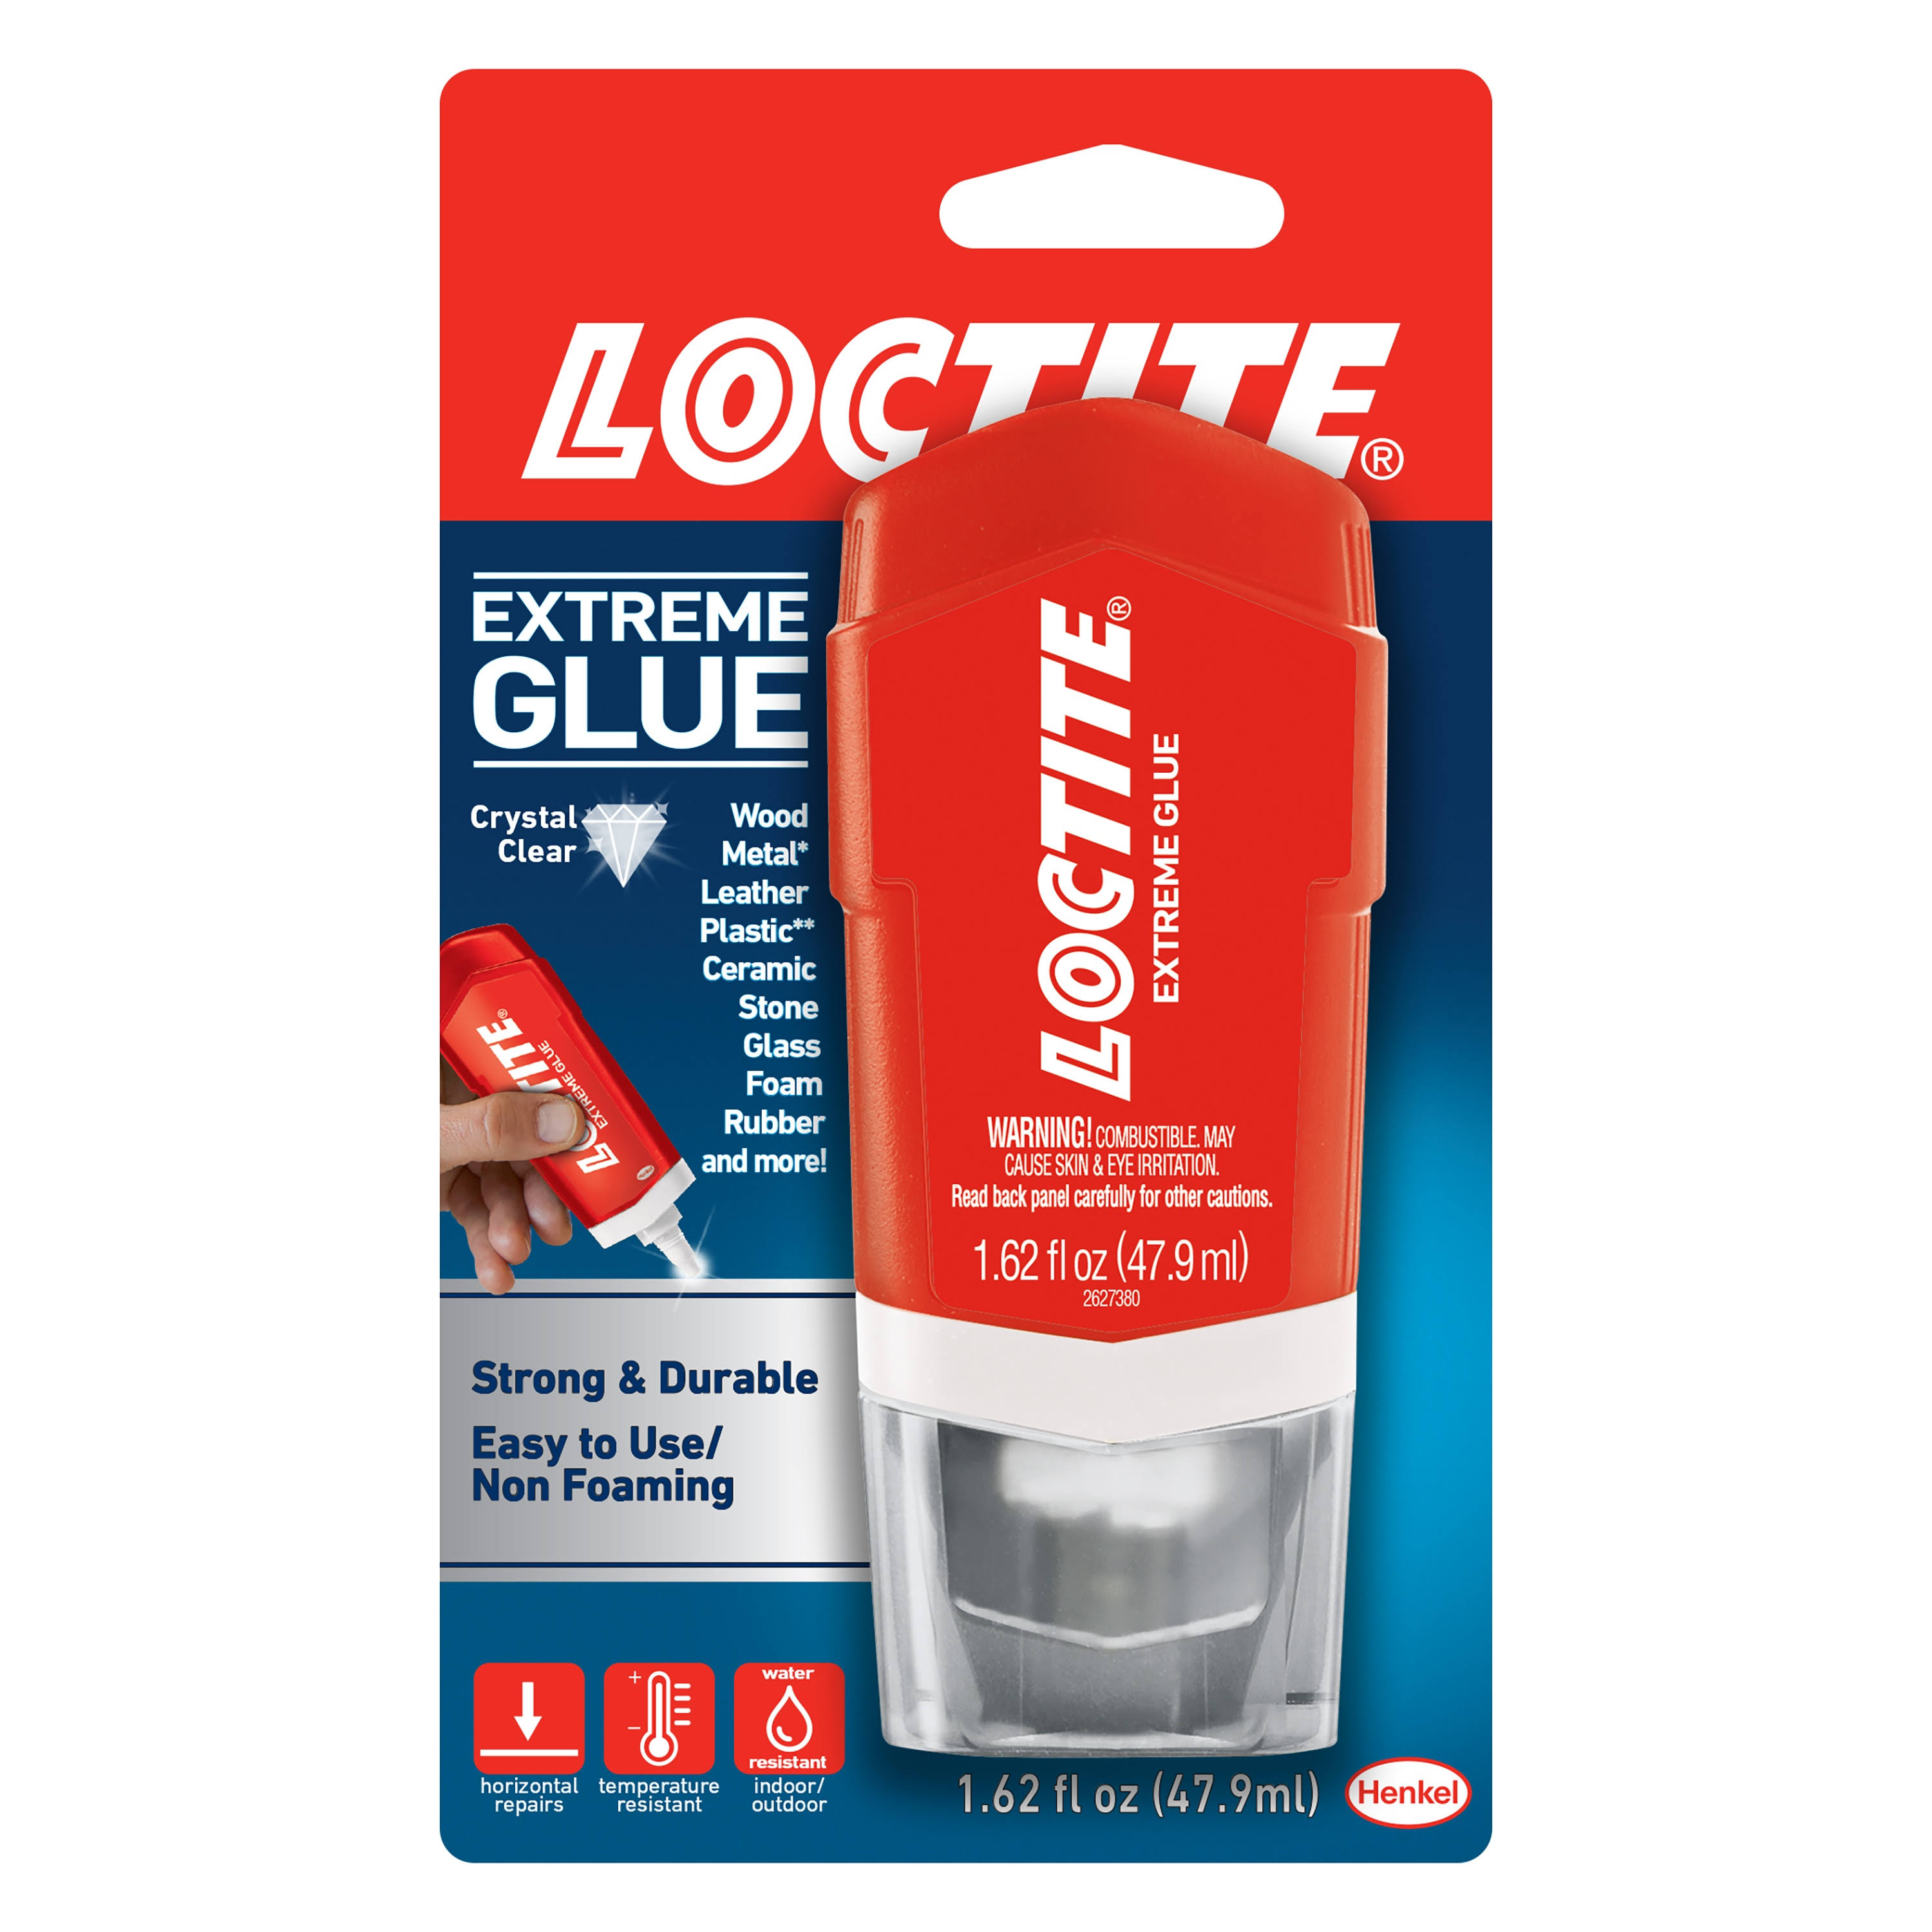 Loctite Glue, Extreme - 1.62 fl oz